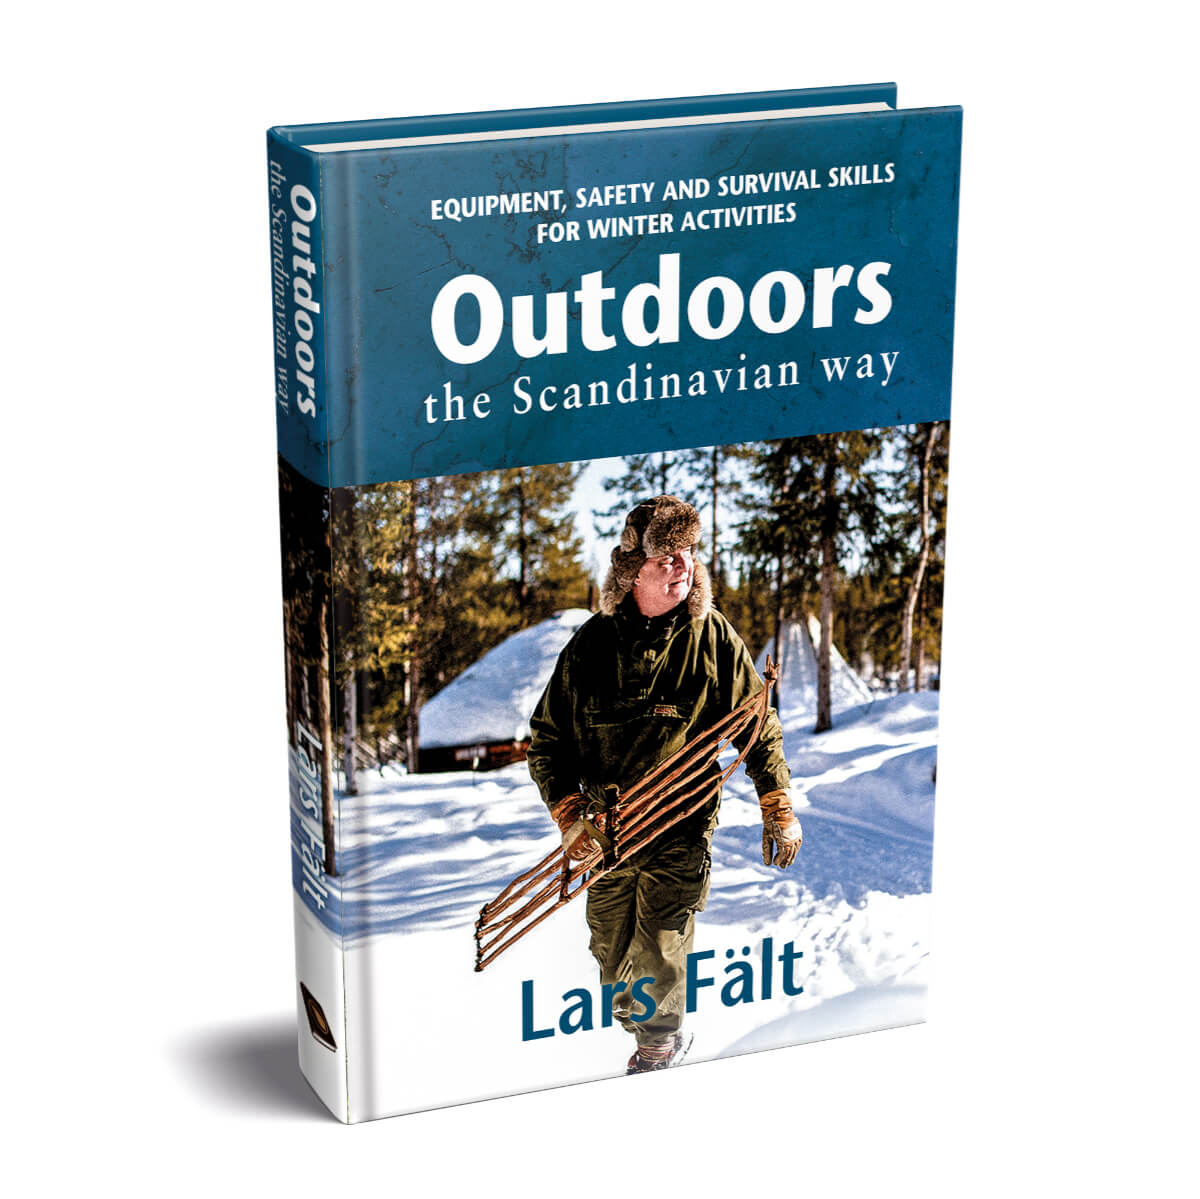  Outdoors the Scandinavian Way by Lars Falt - Winter Edition